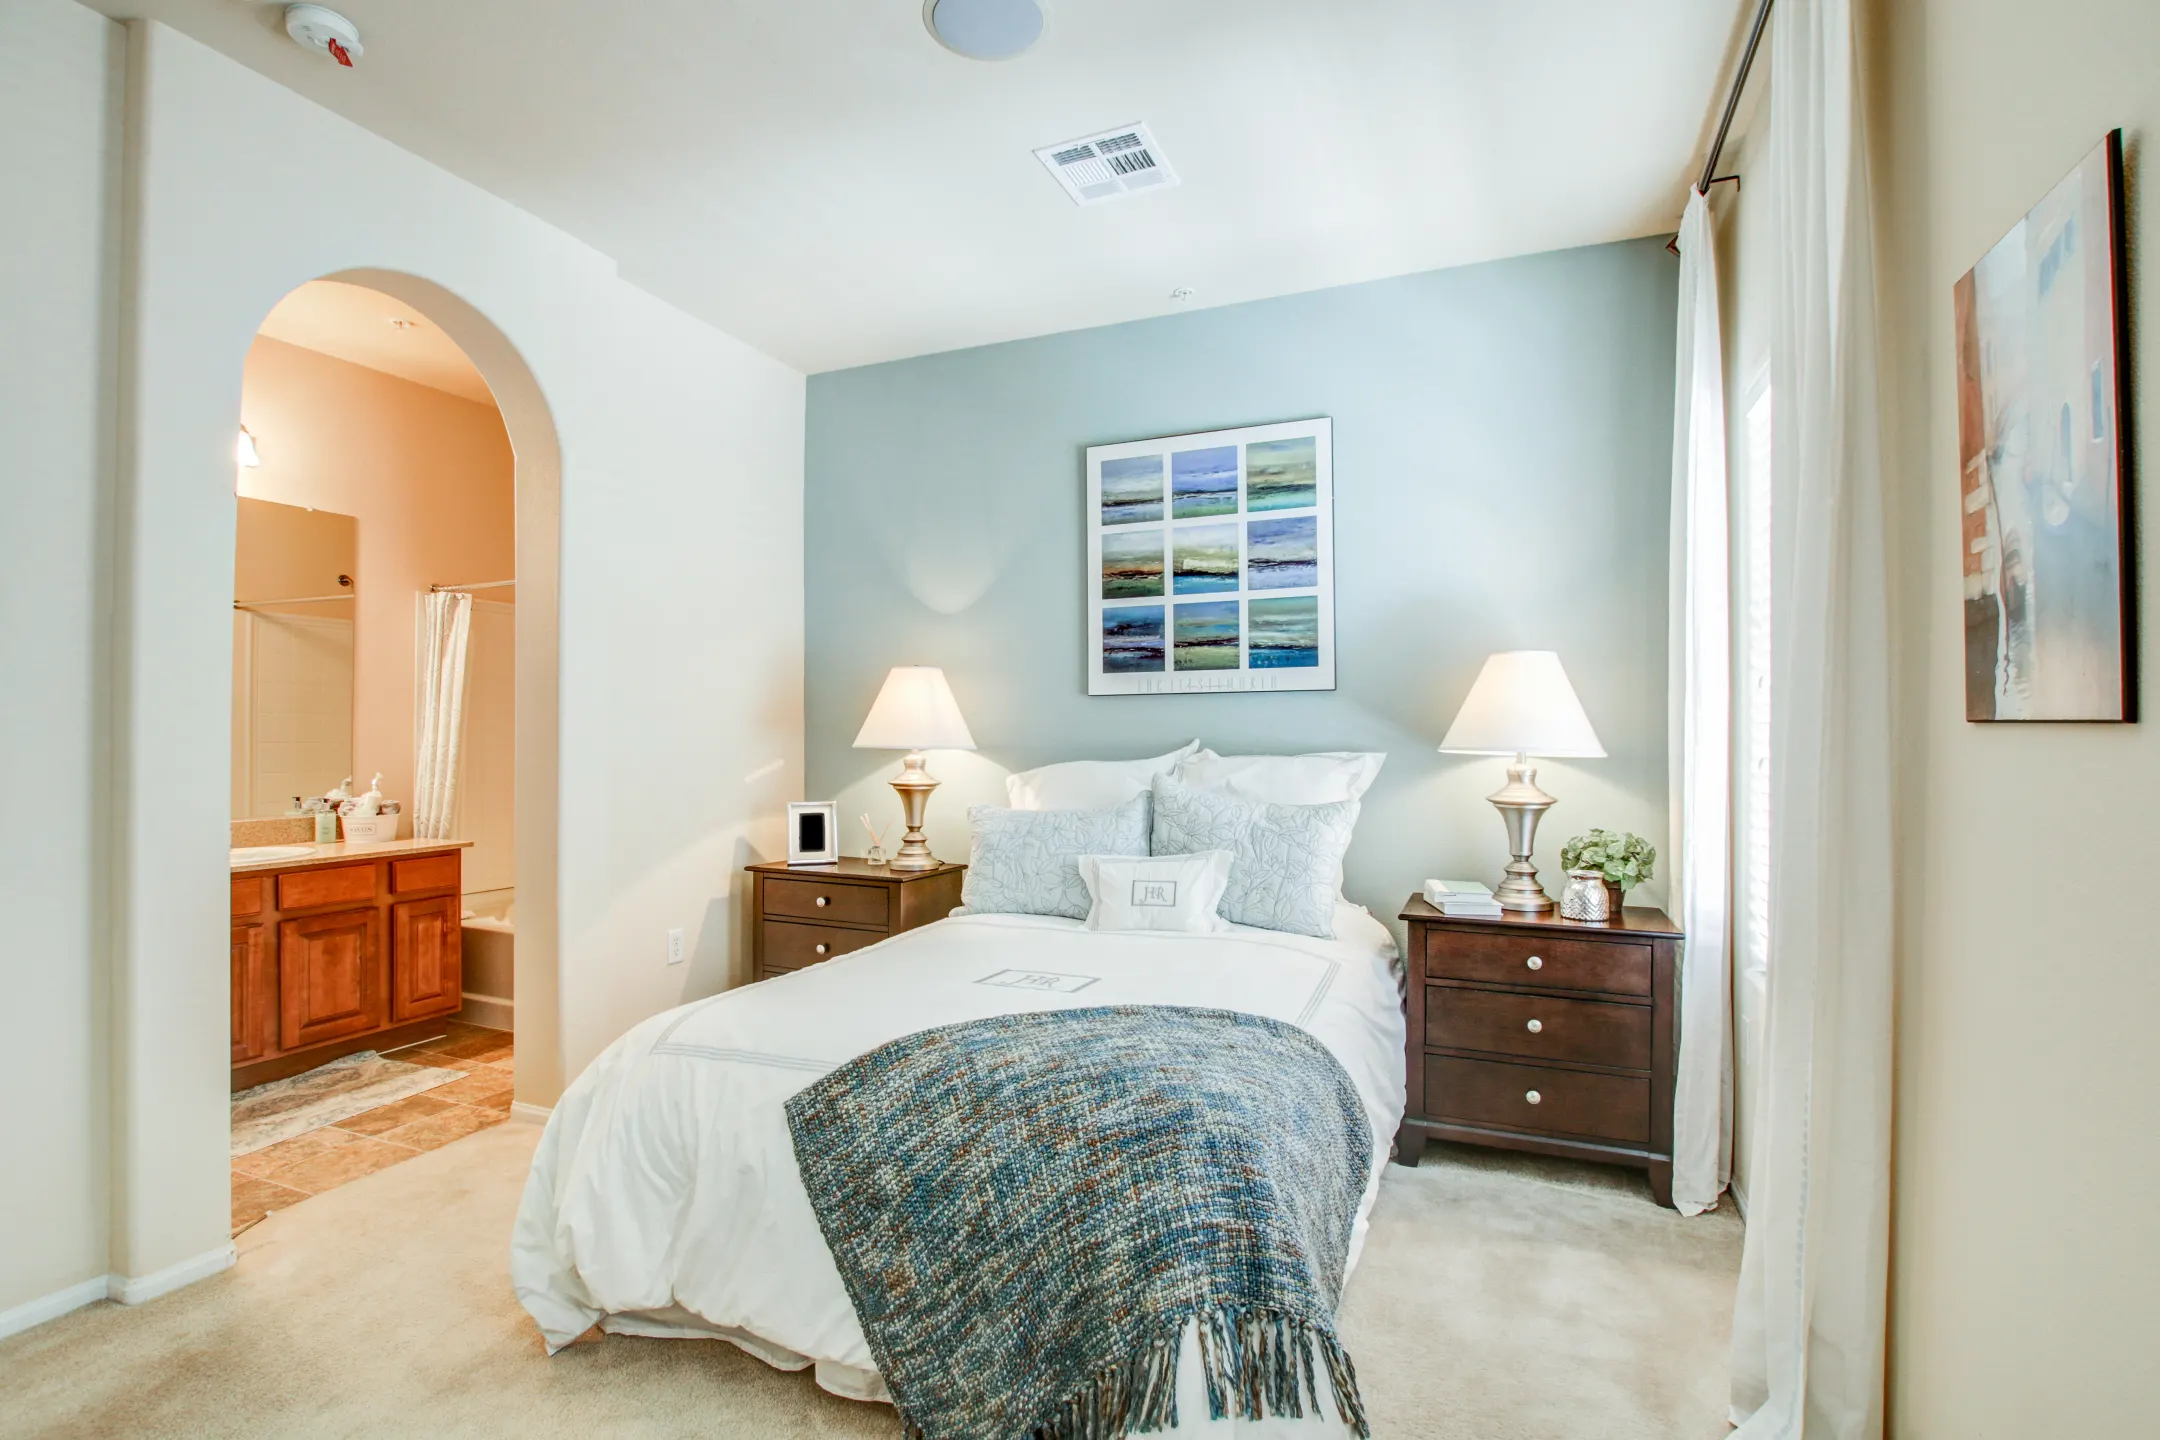 Bedroom - Horizon Ridge Park Apartments - Henderson, NV